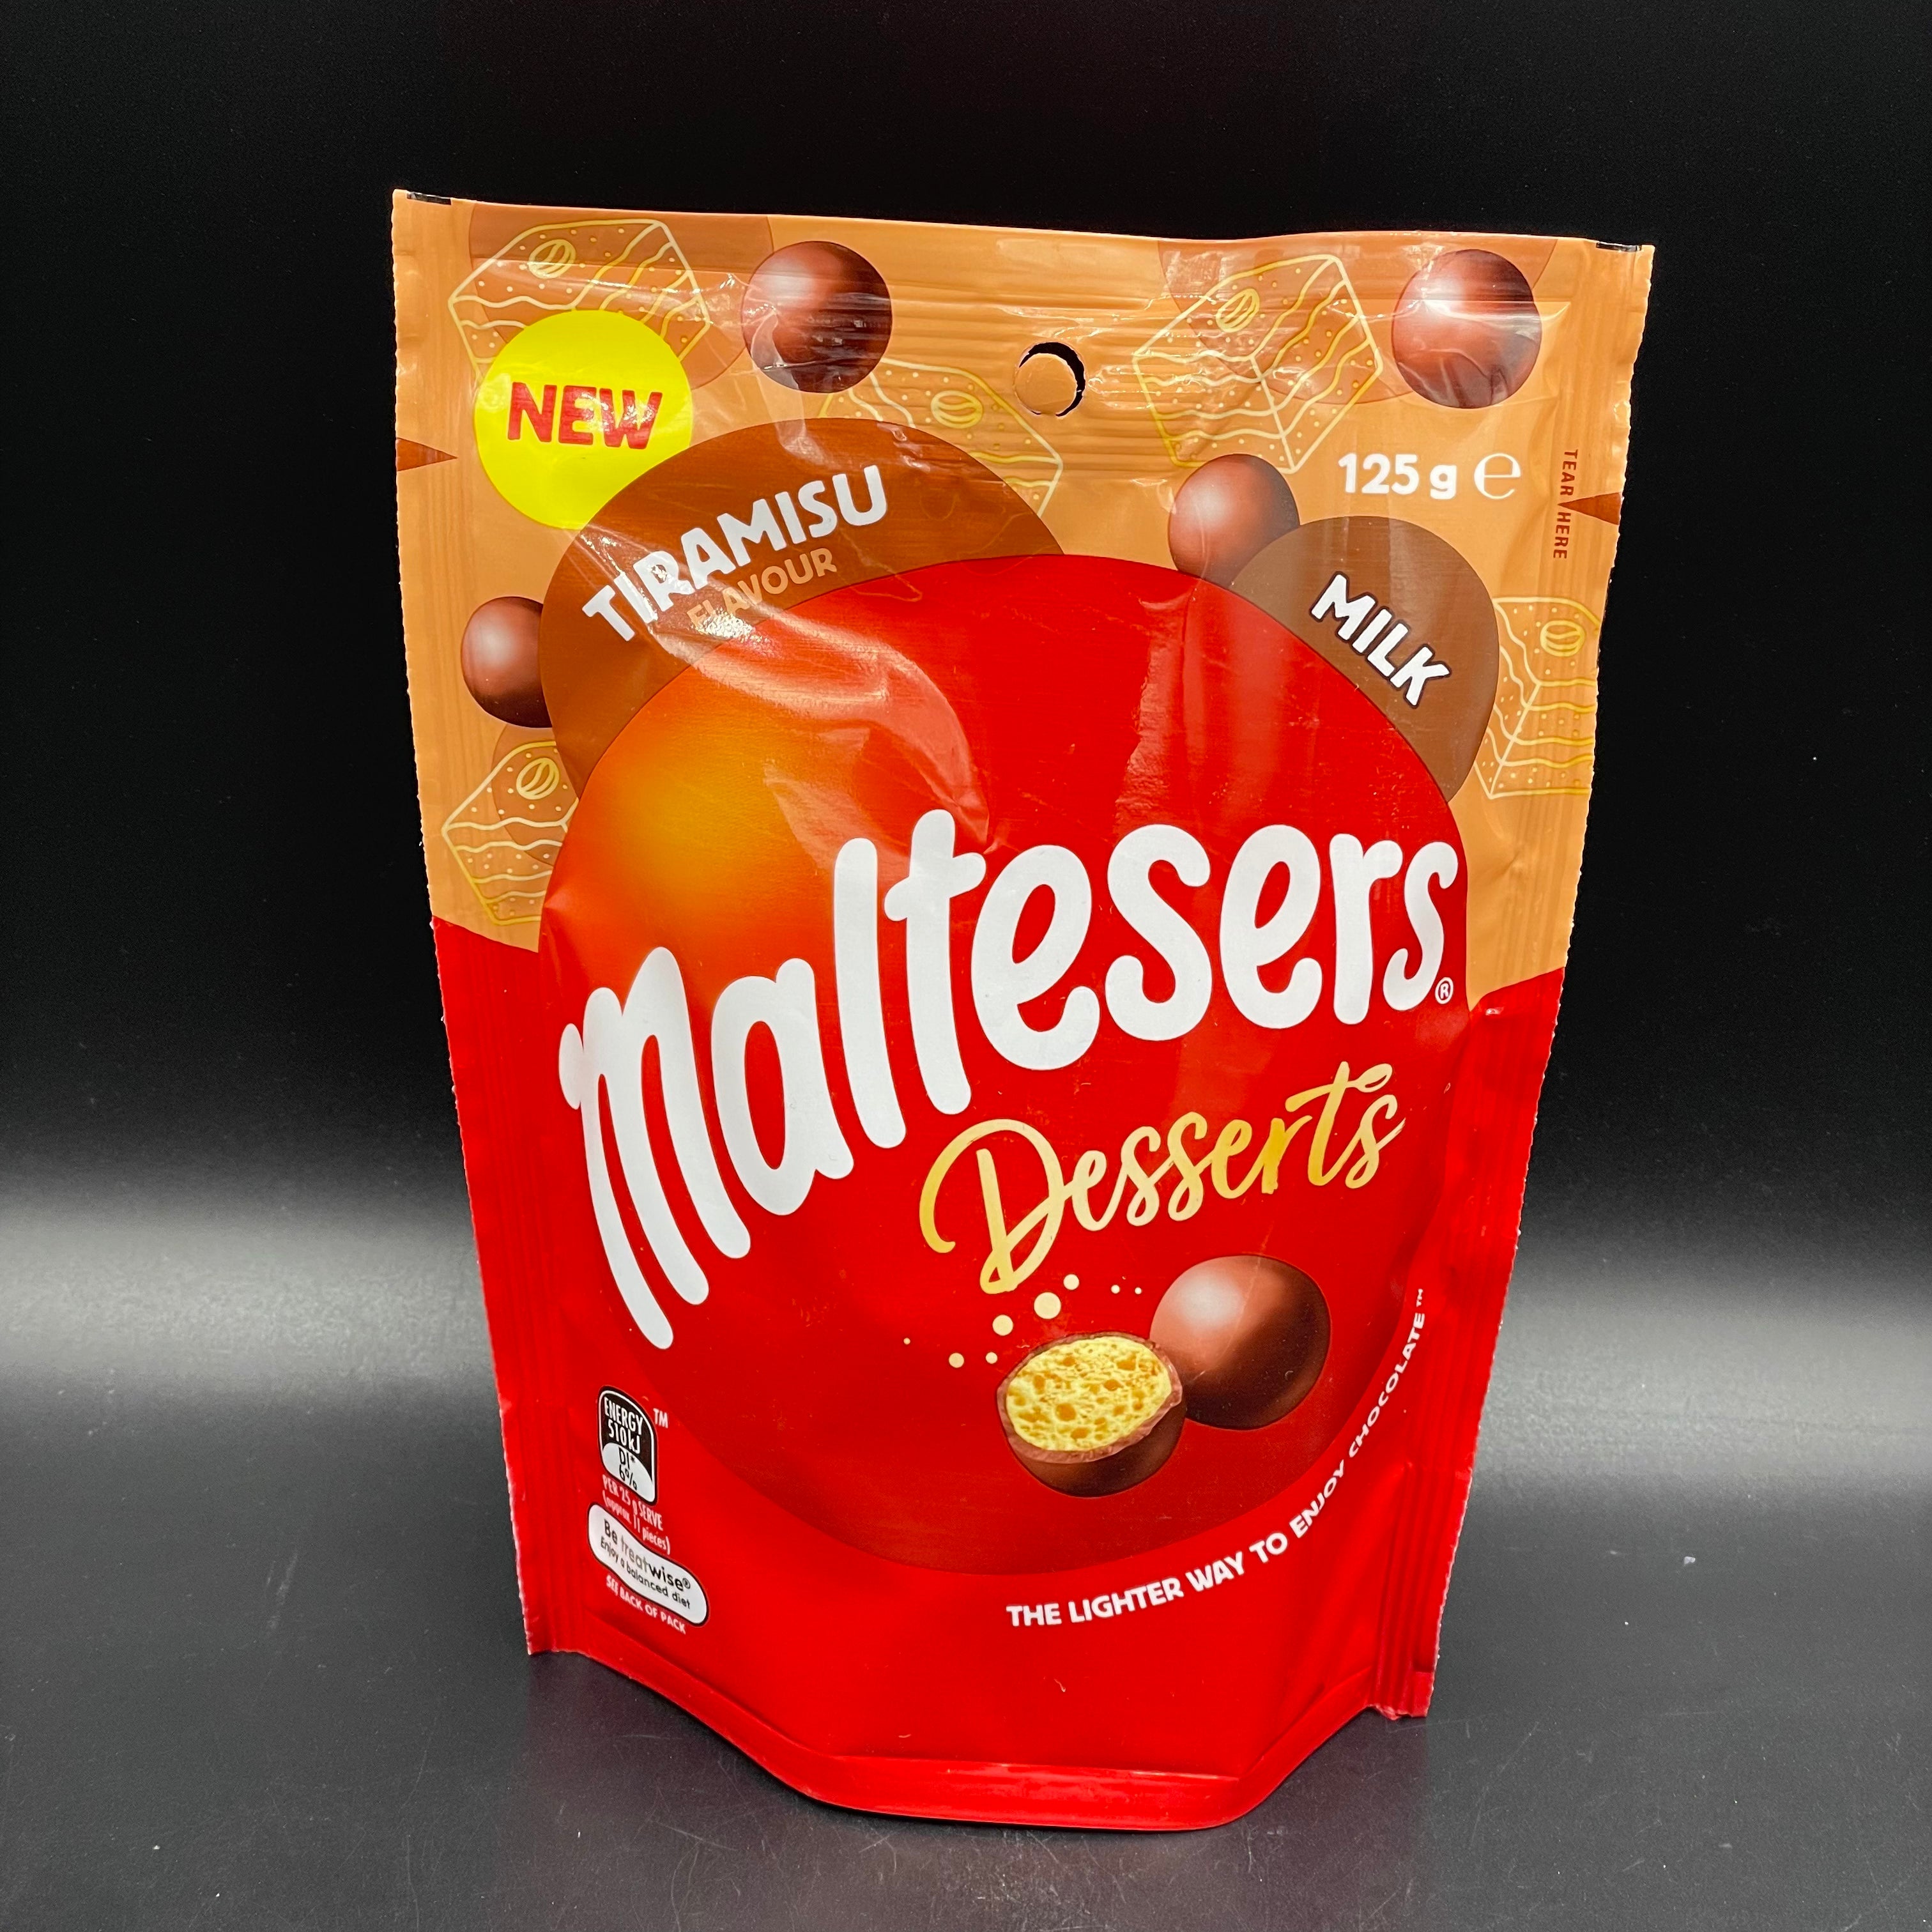 Buy Maltesers Desserts Tiramisu Chocolate Snack & Share Bag 125g Online, Worldwide Delivery